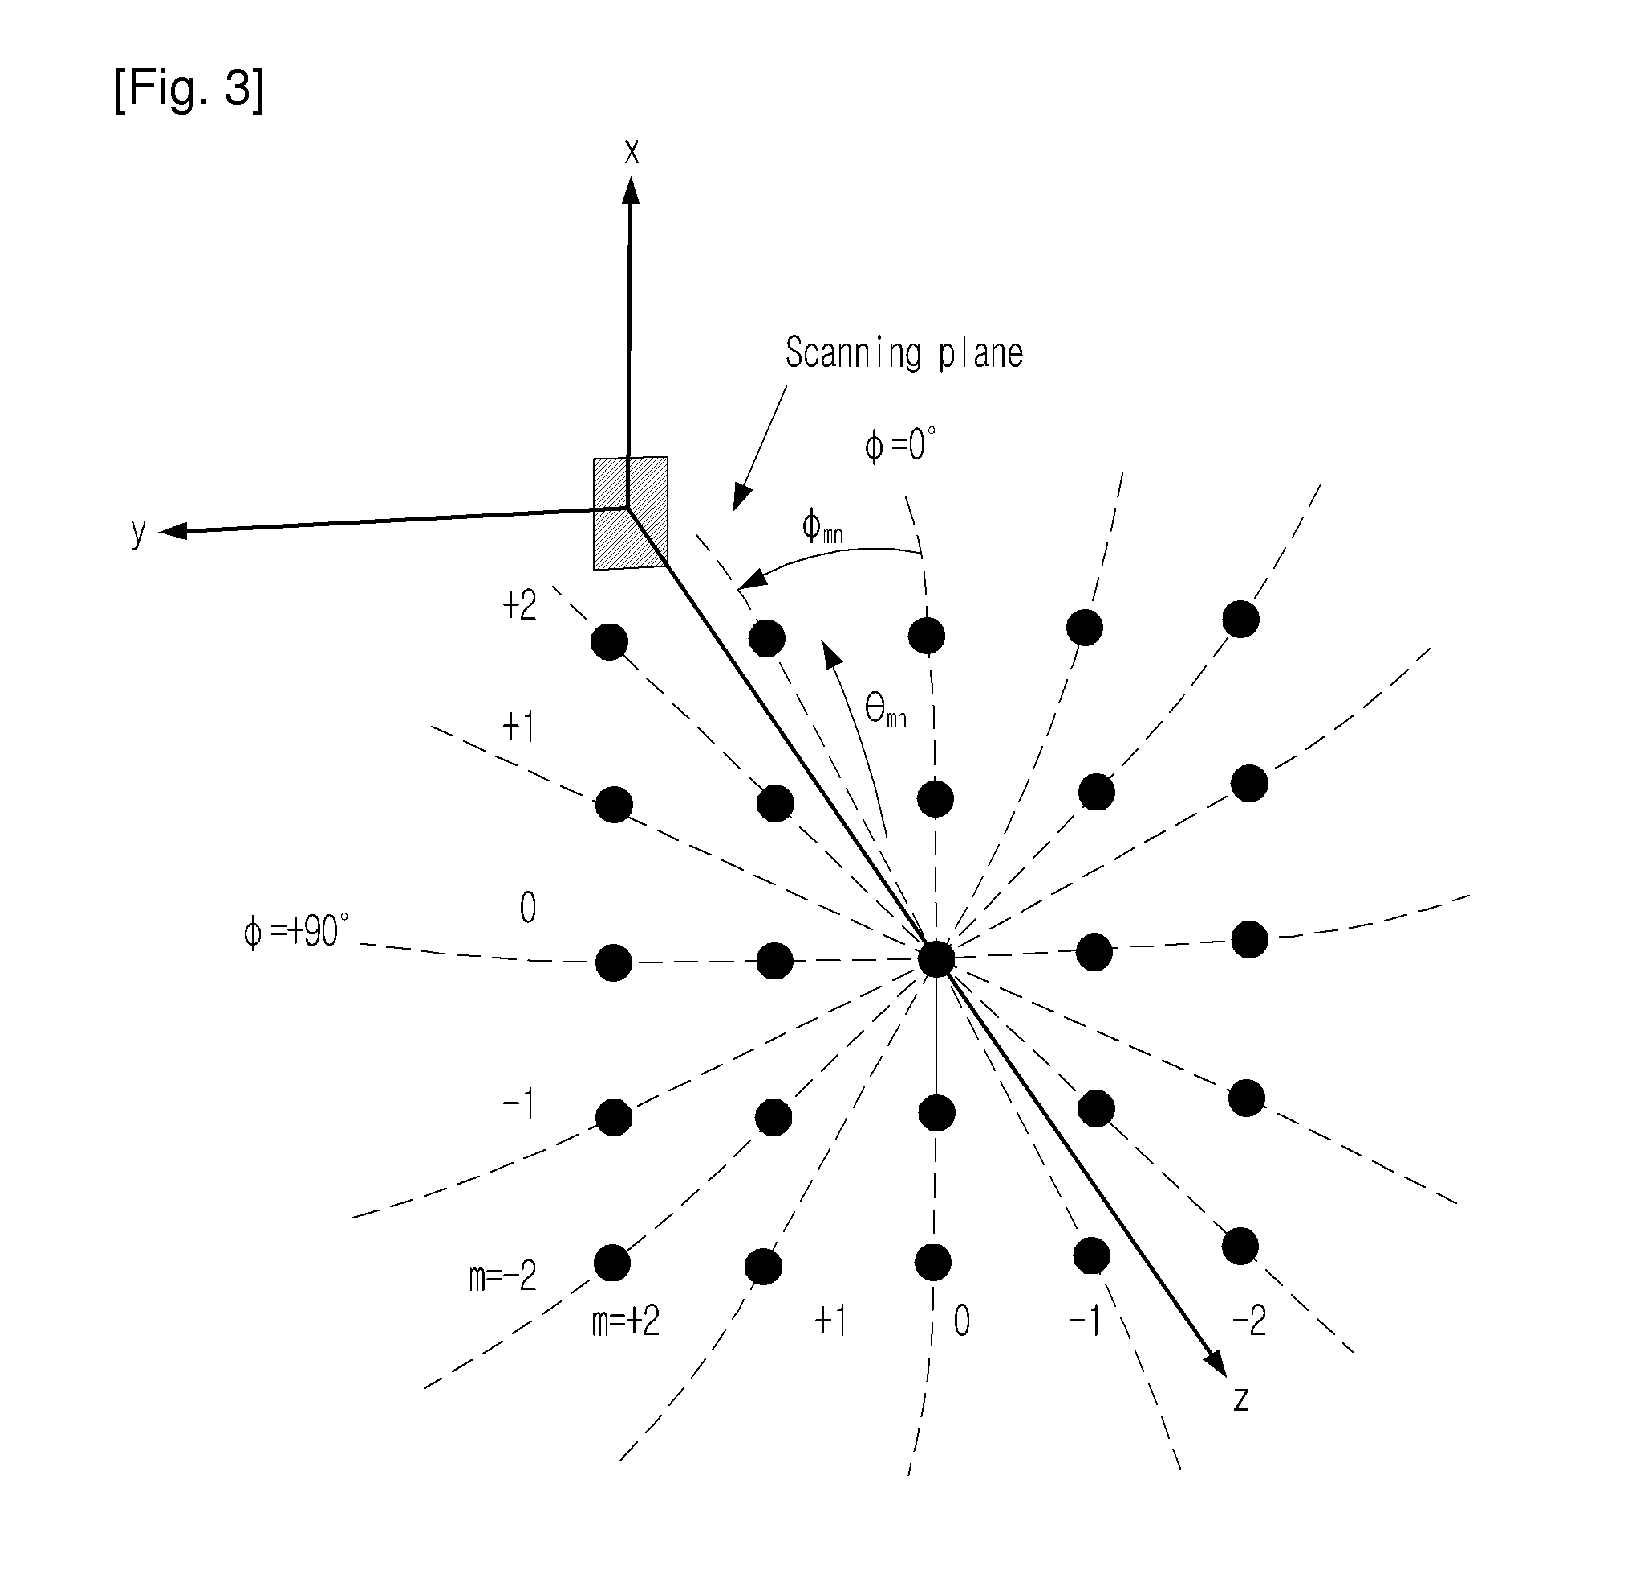 System and method for measuring antenna radiation pattern in fresnel region based on phi-variation method